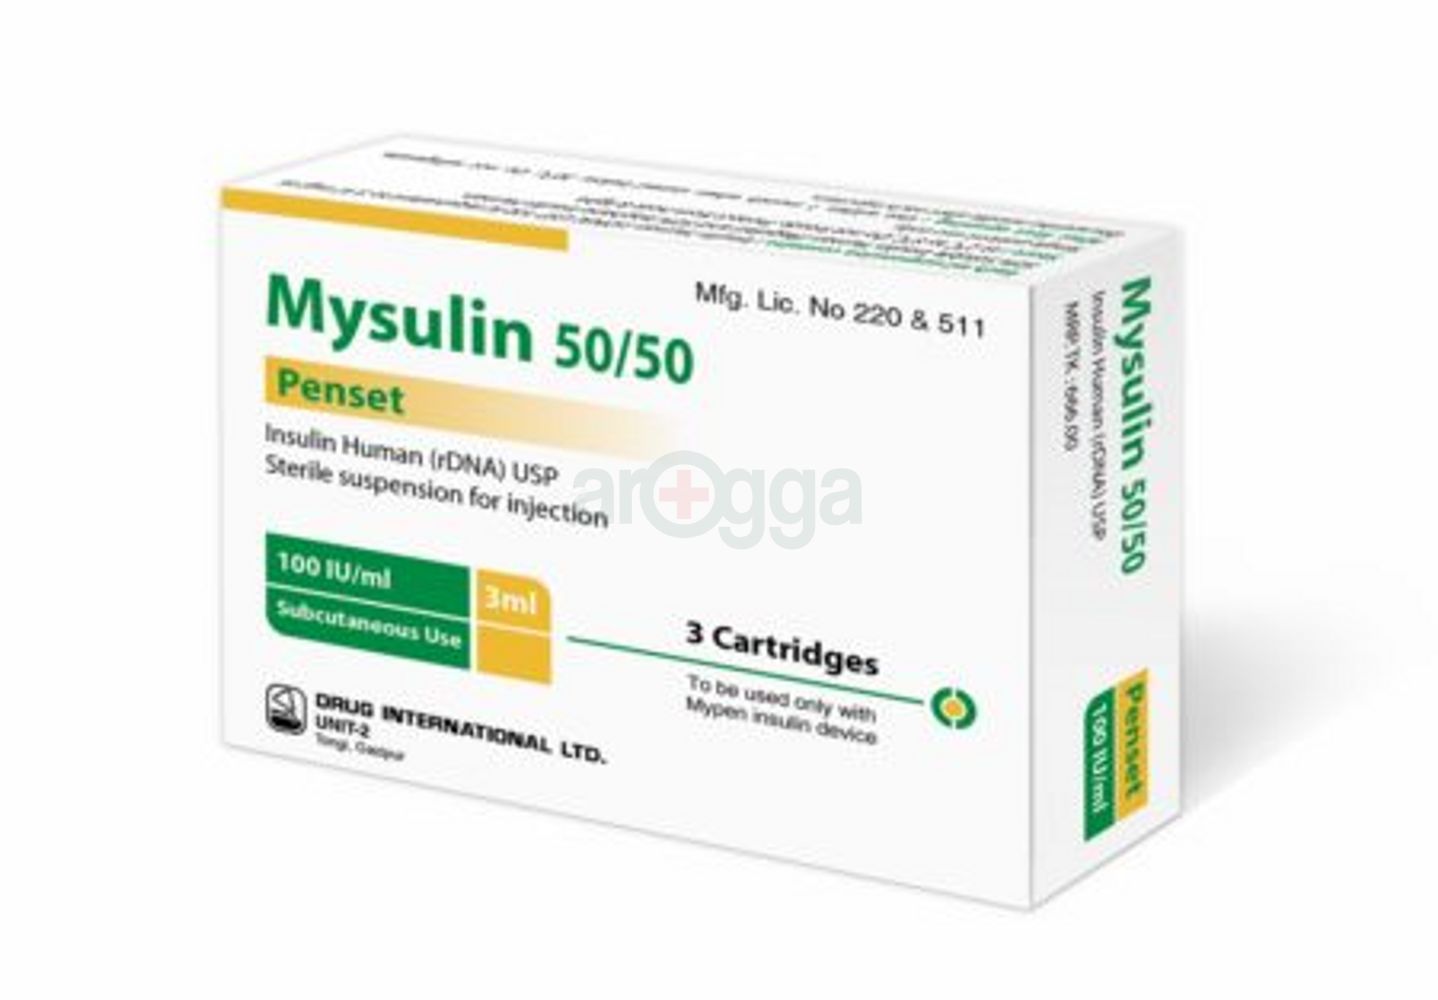 Mysulin 50/50 Penset